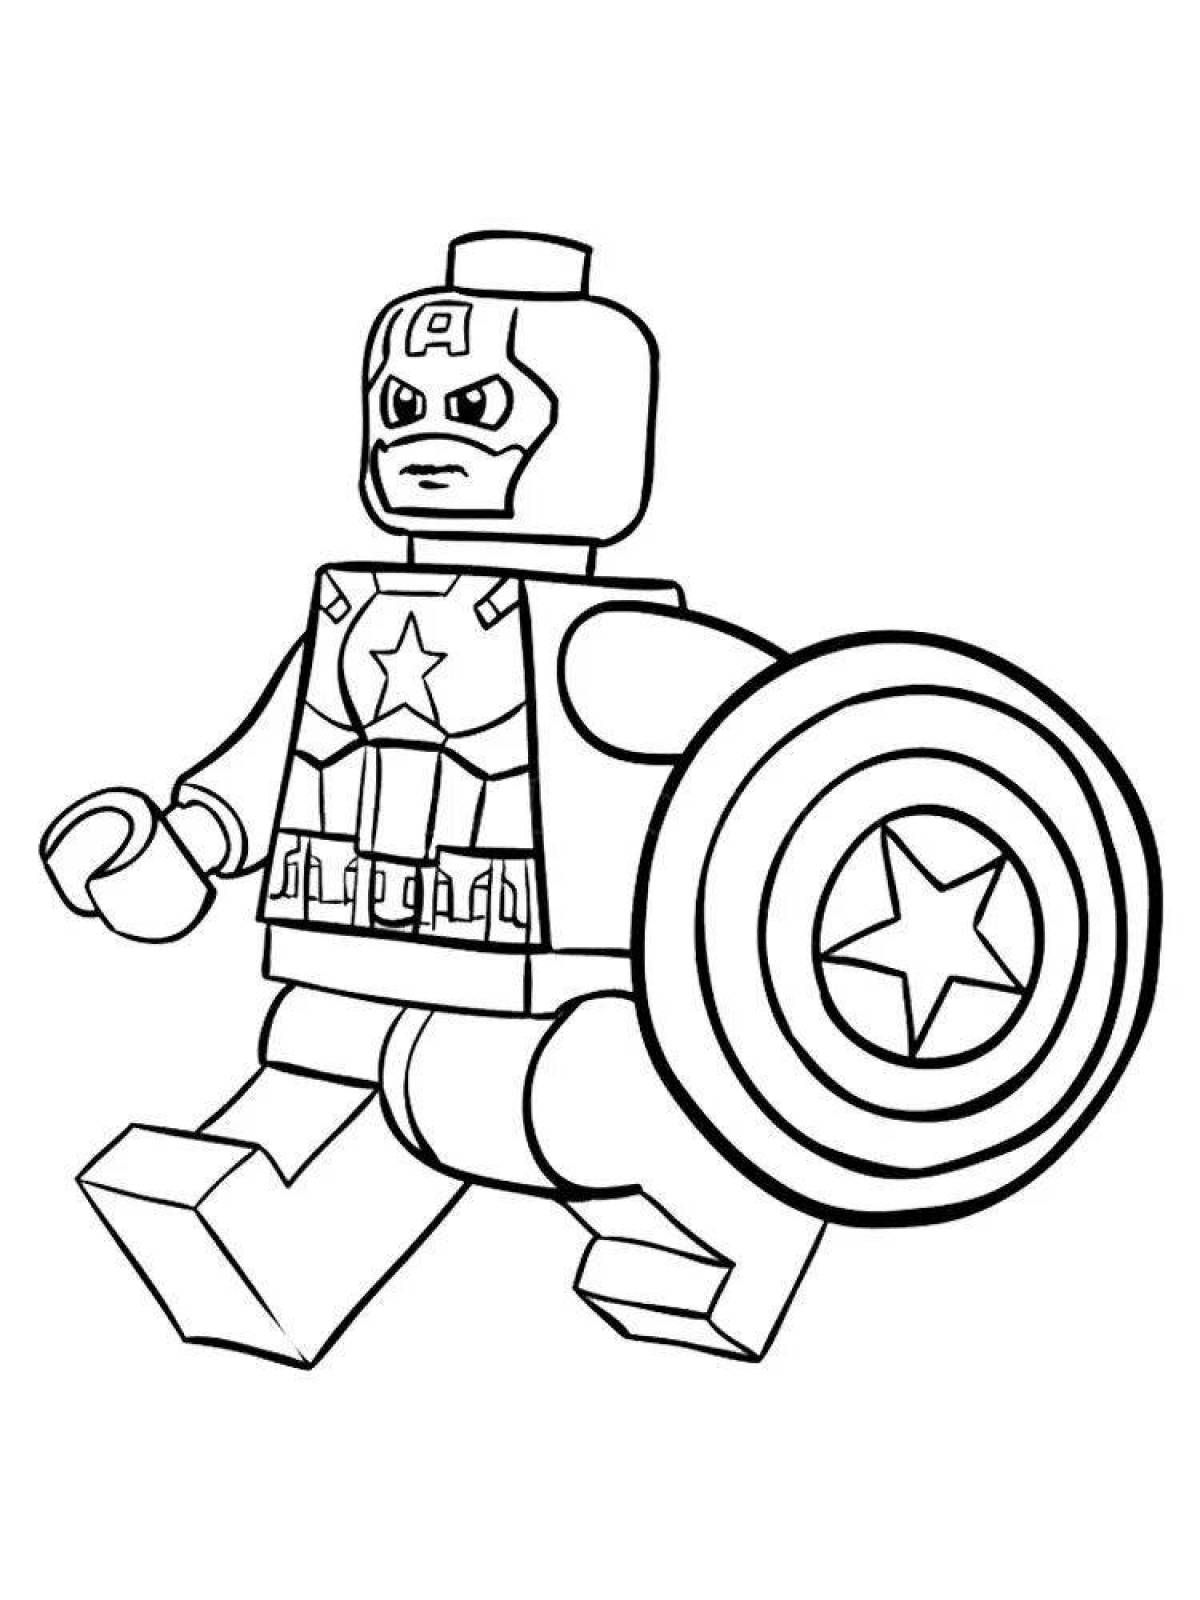 Lego captain america bright coloring page